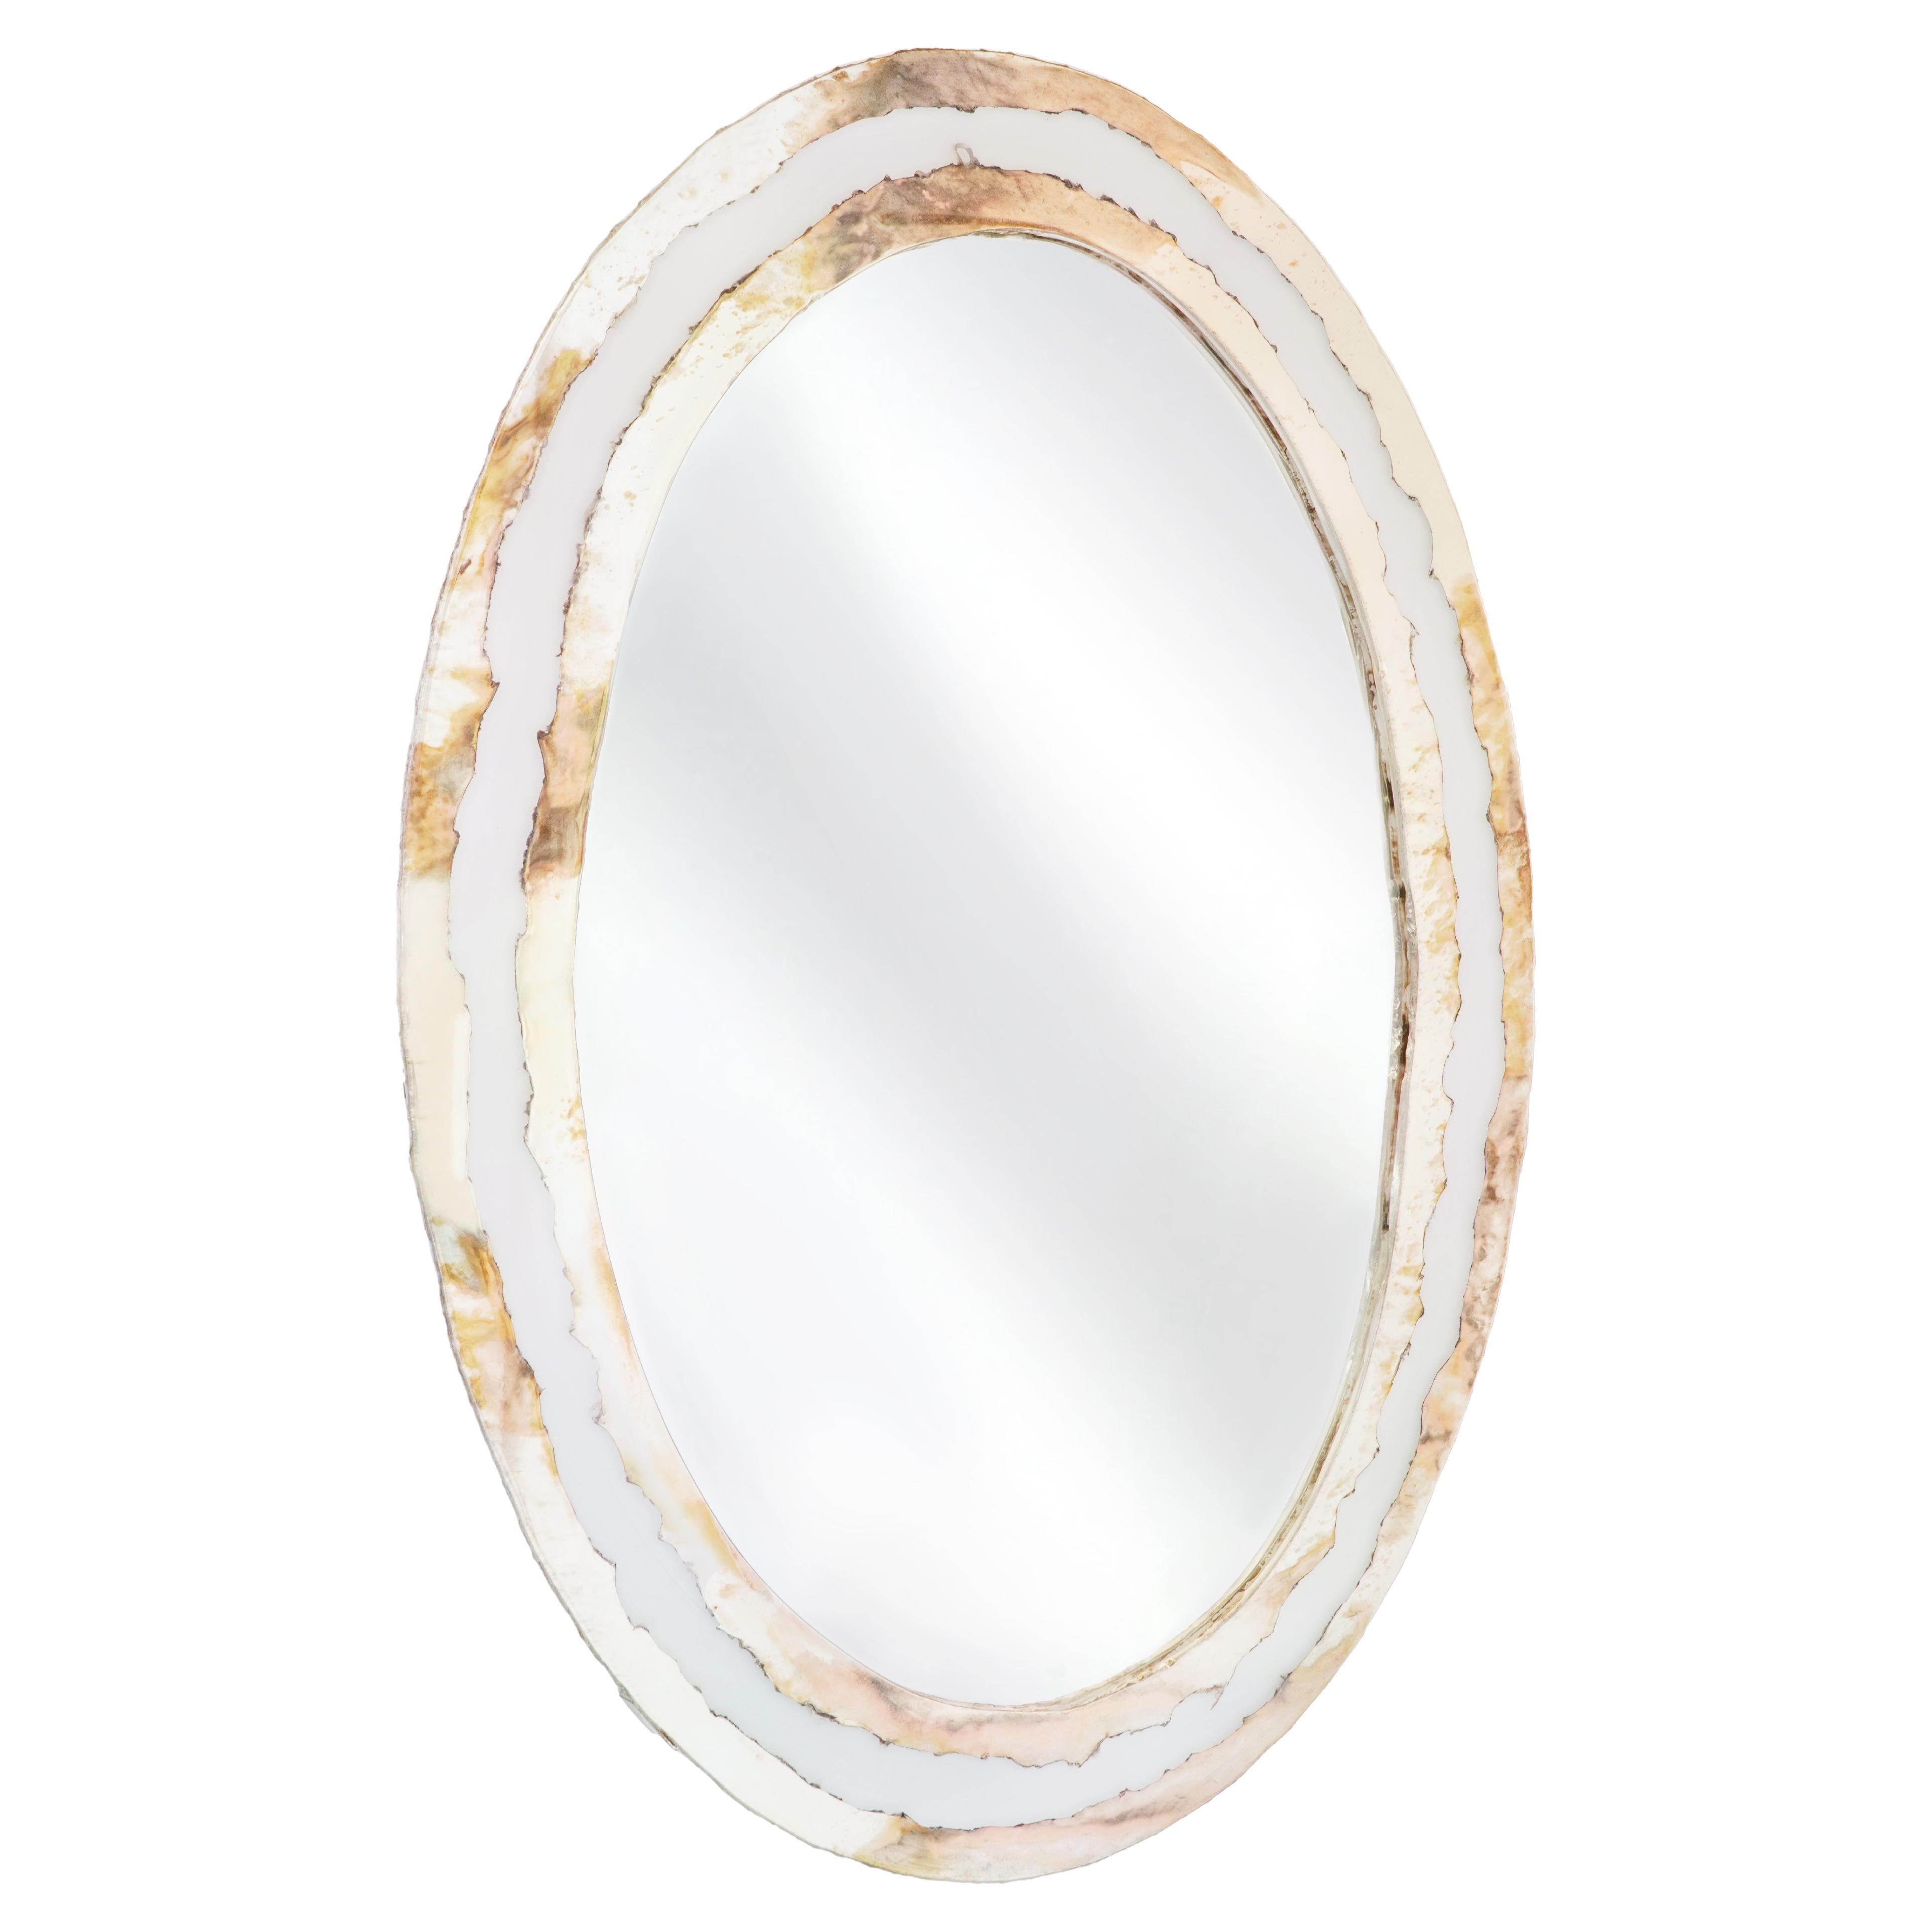 "Life" contemporary mirror 120 central mirror, white silvered glass ring,Birch  